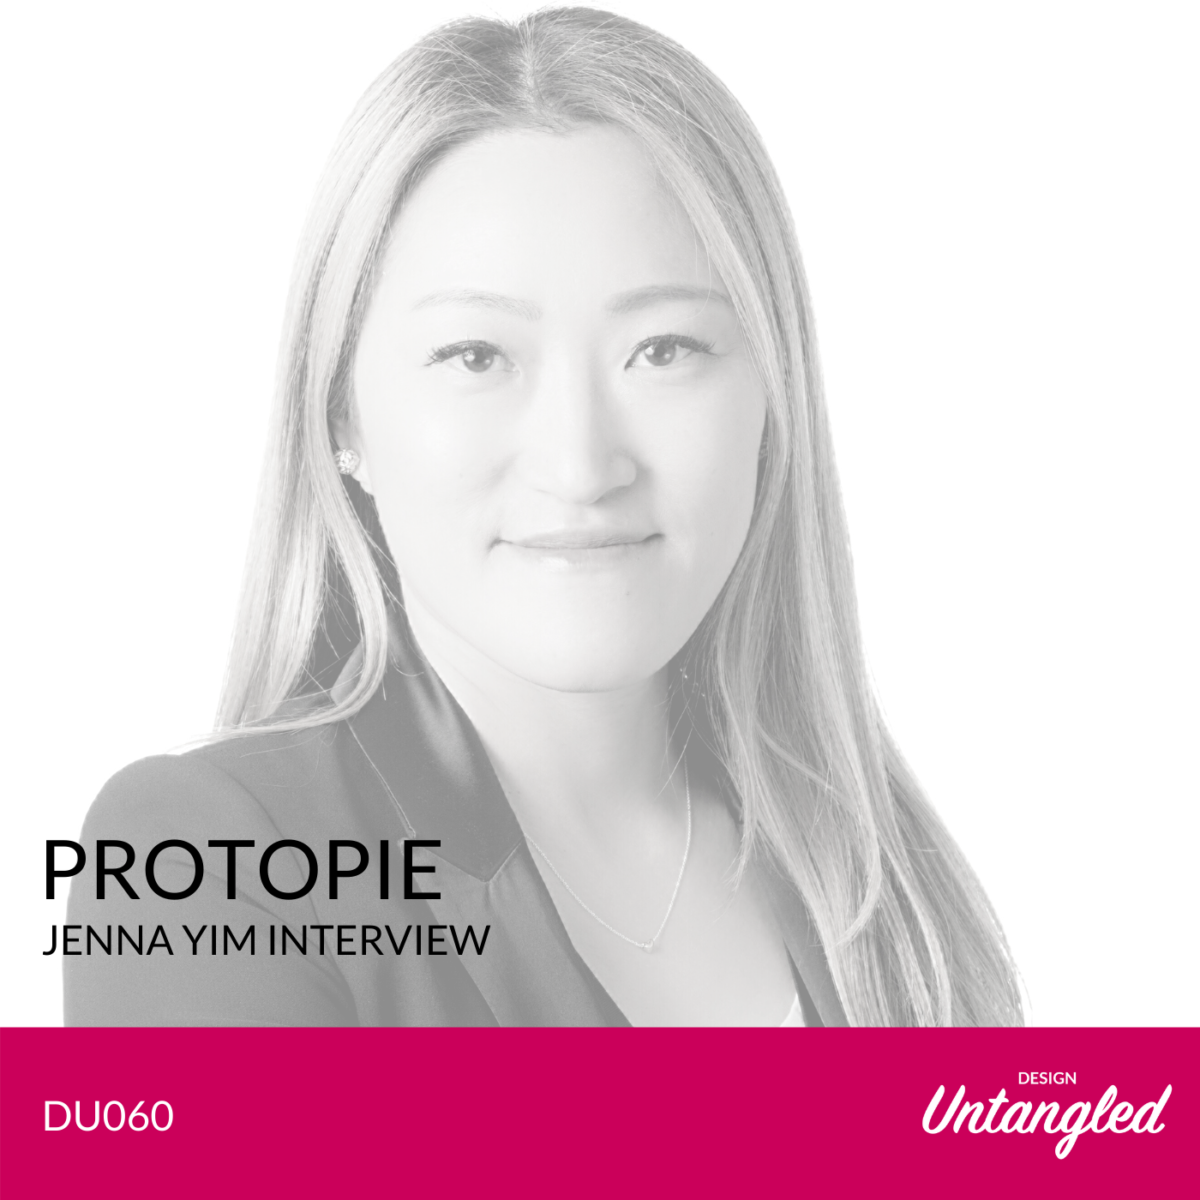 DU060 - Protopie - Jenna Yim Interview